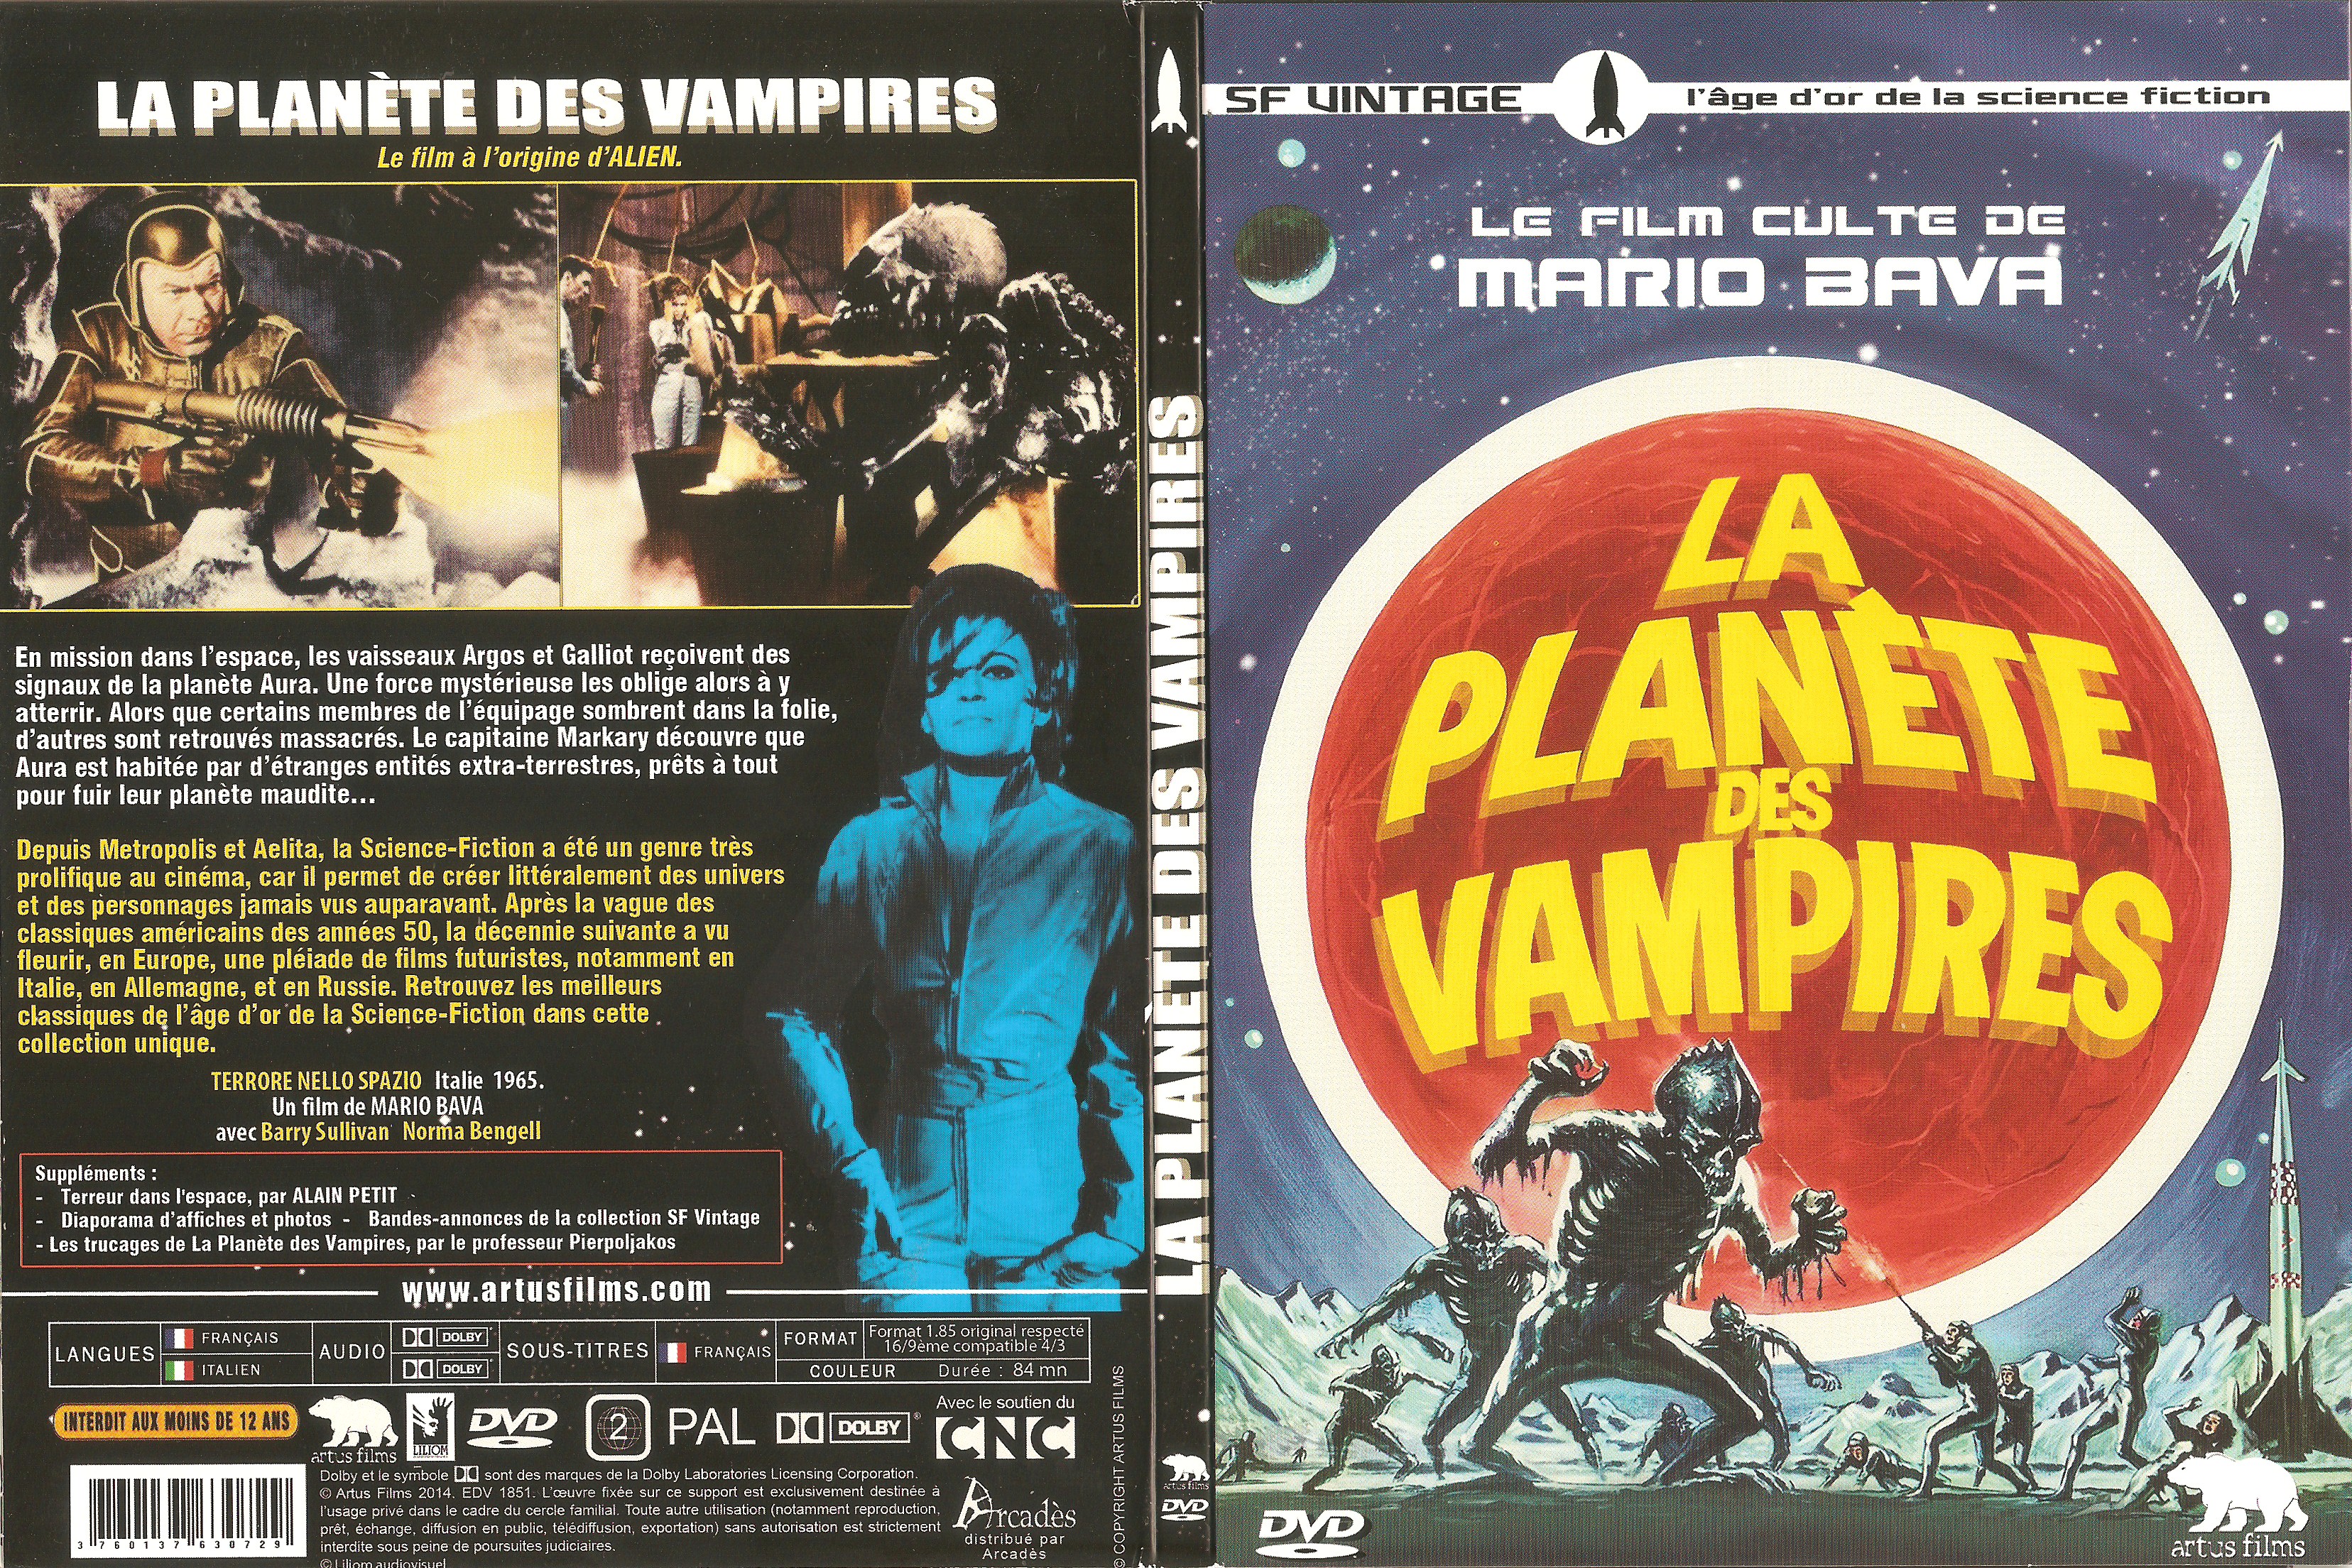 Jaquette DVD La Plante des vampires v2